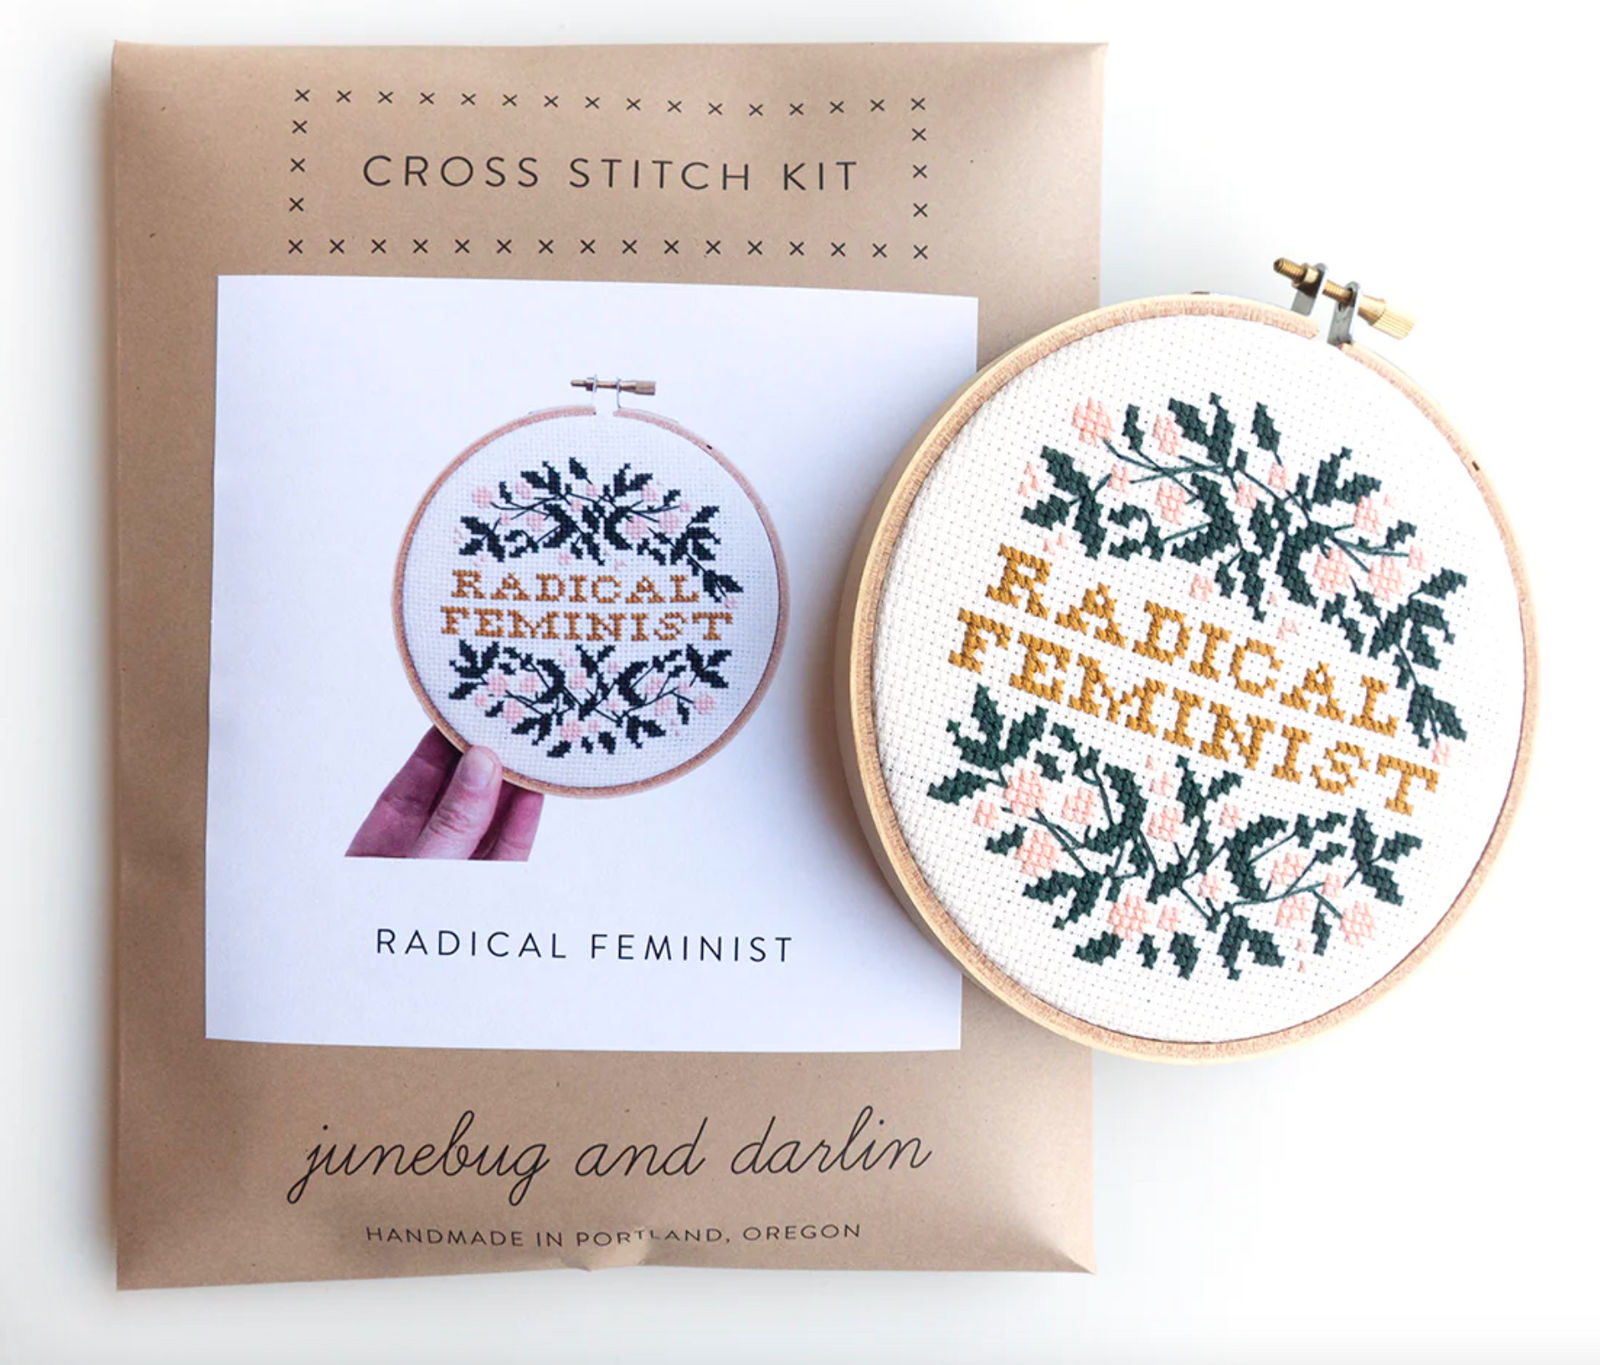 Cross Stitch Kit: Radical Feminist